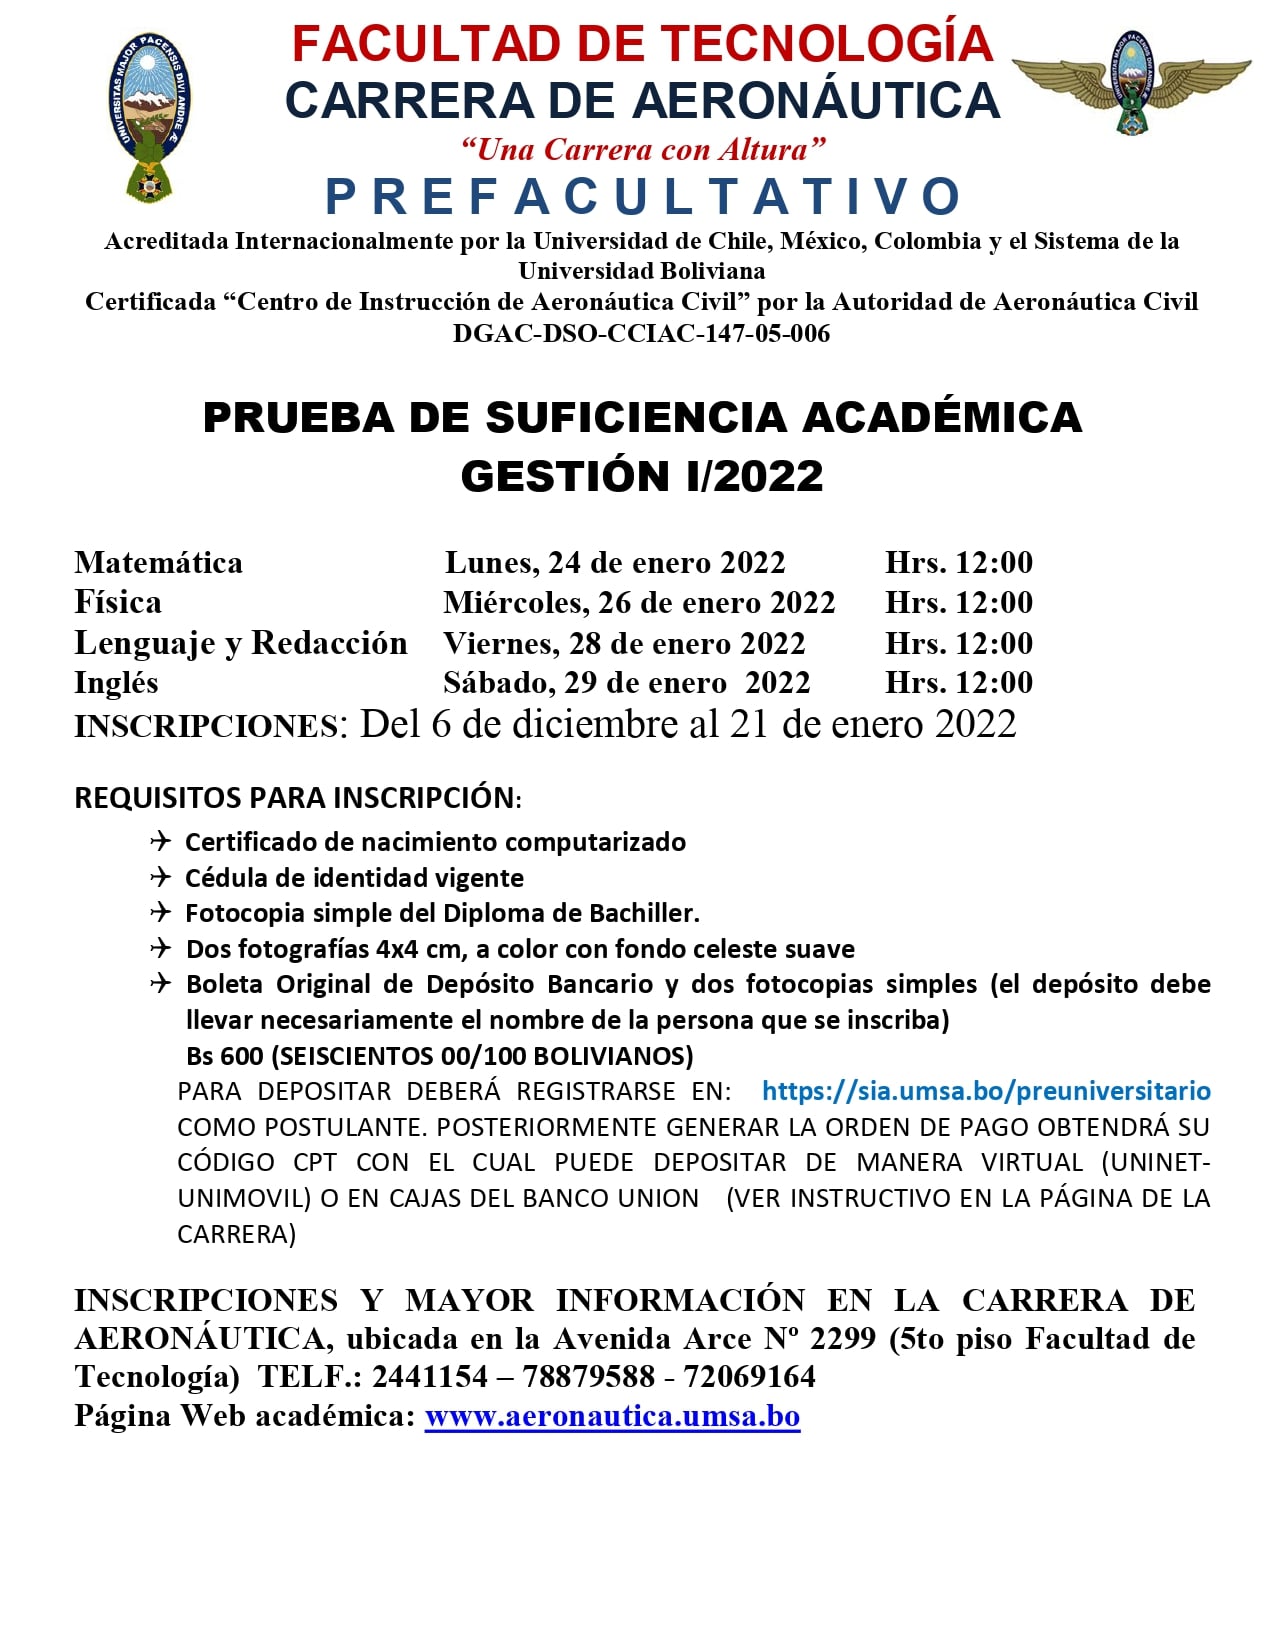 Prefacultativos - FT-UMSA - Universidad Mayor de San Andrés